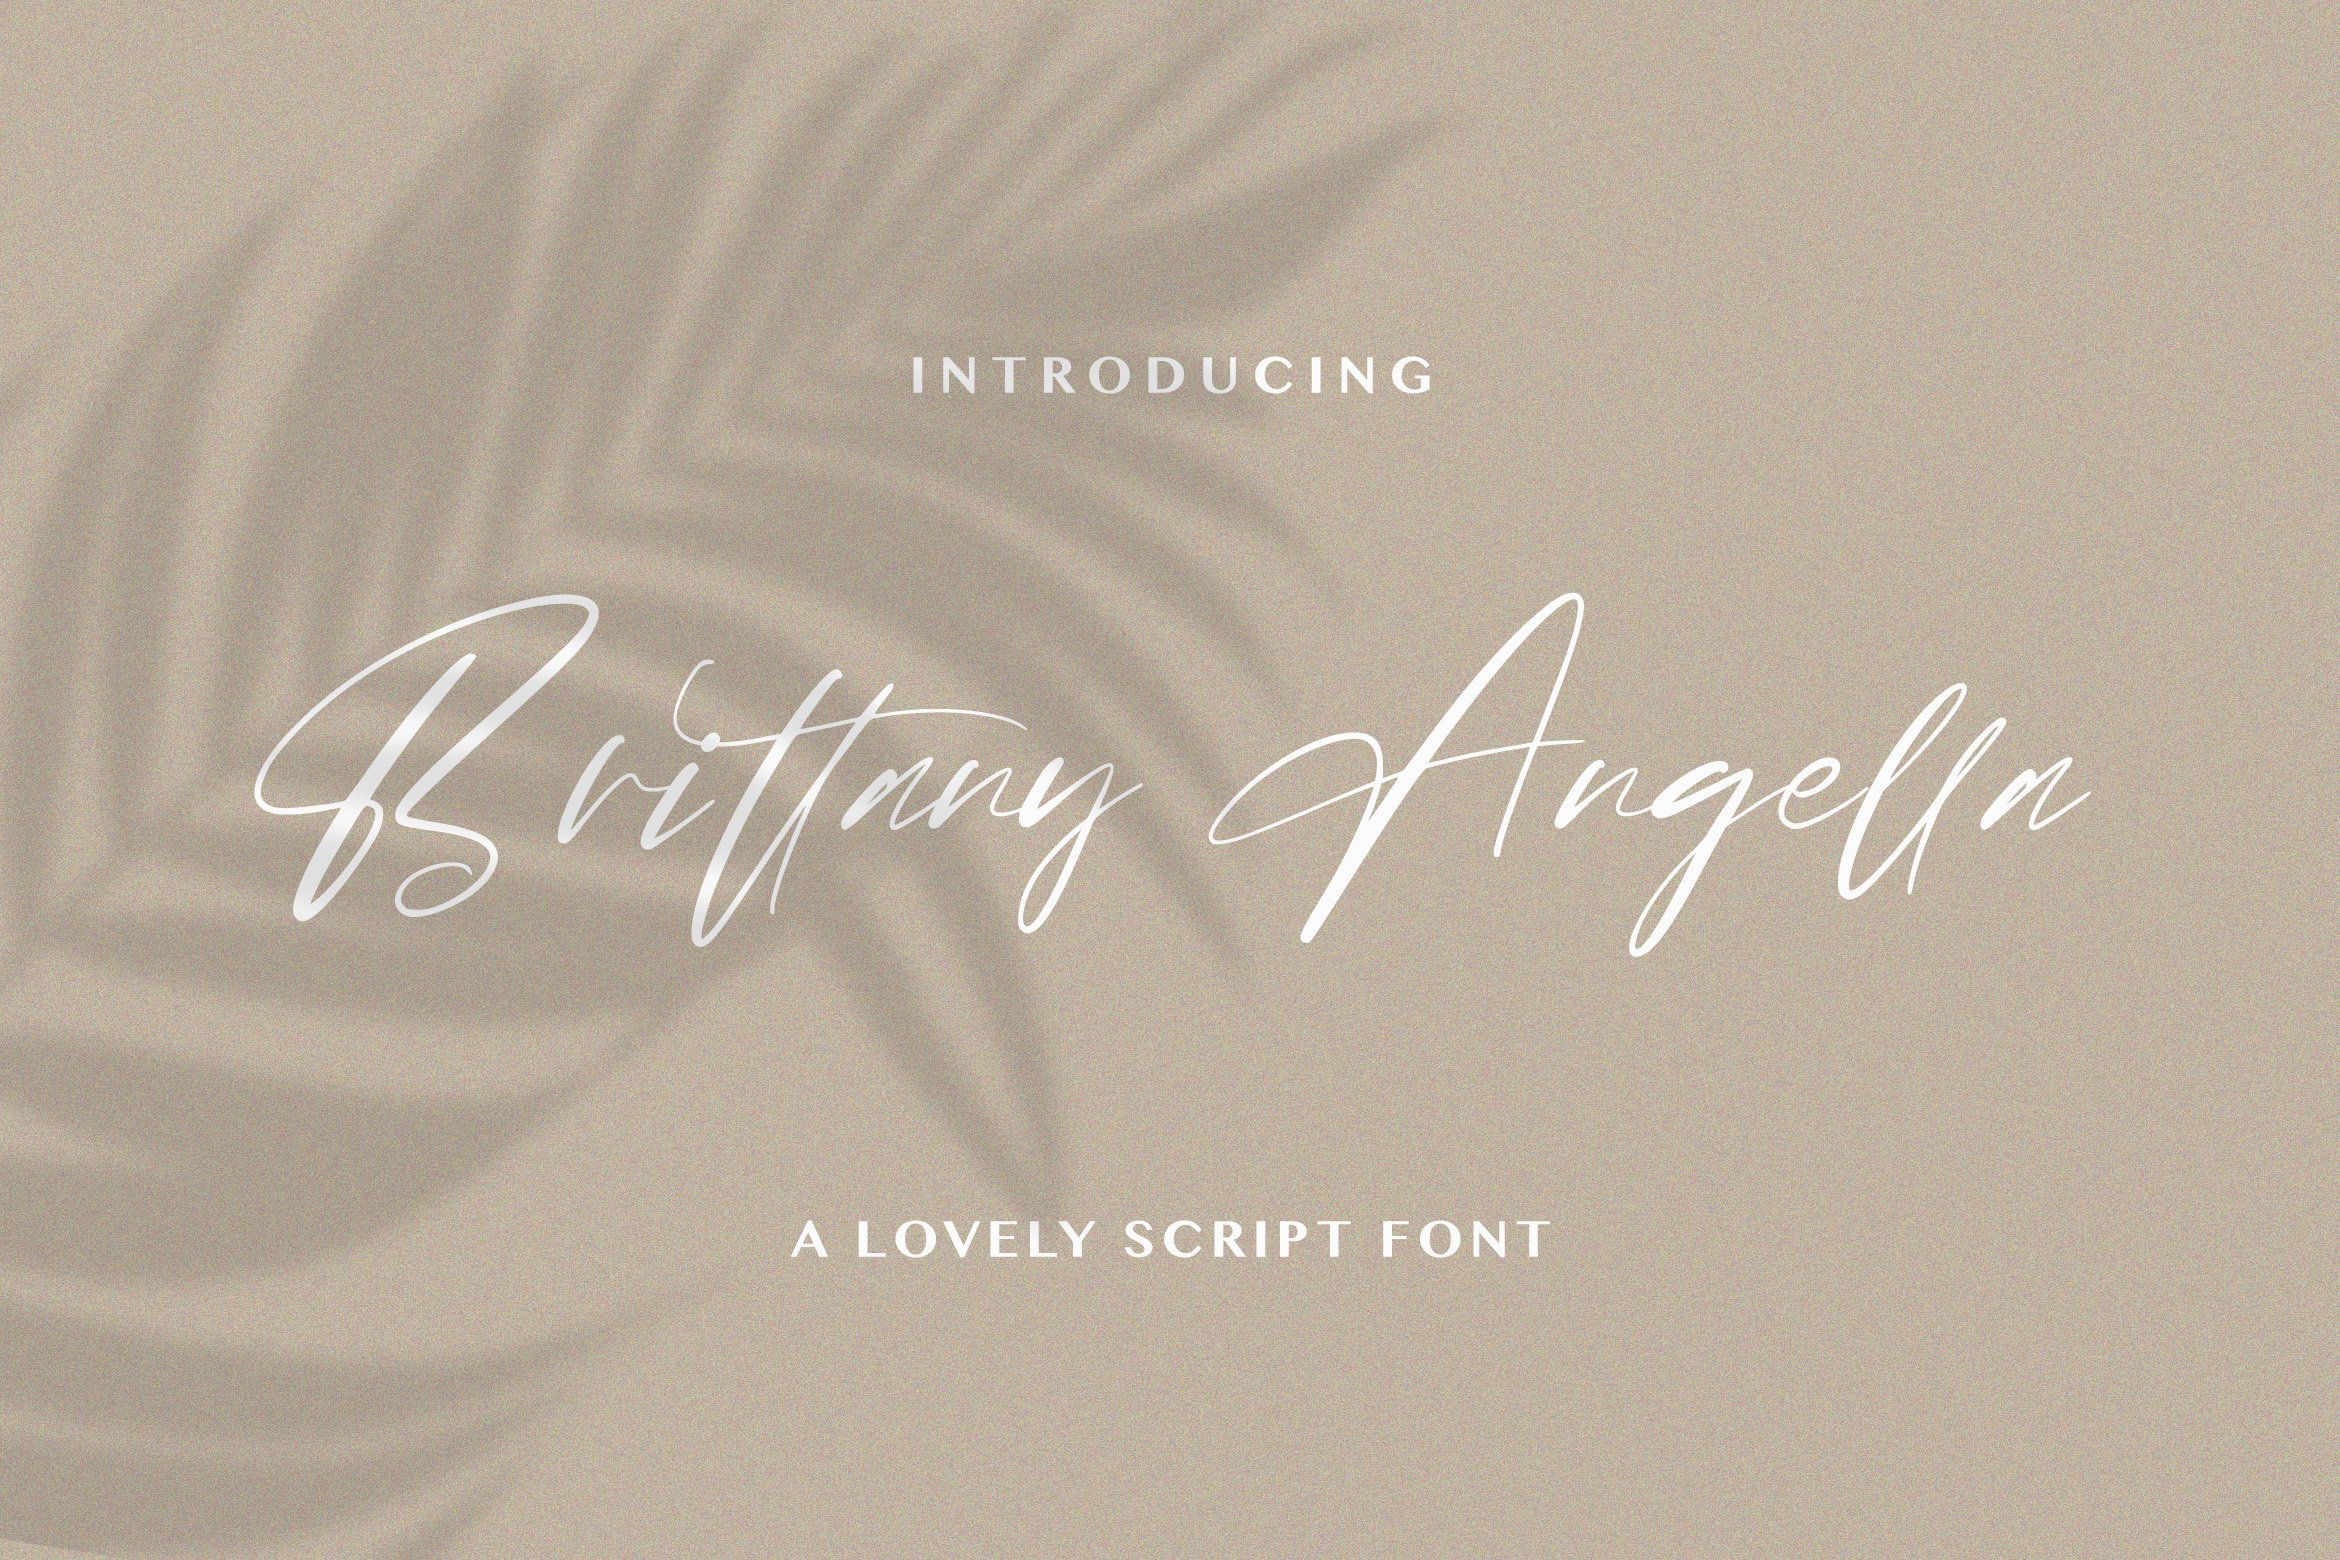 Brittany Angella - Handwritten Font cover image.